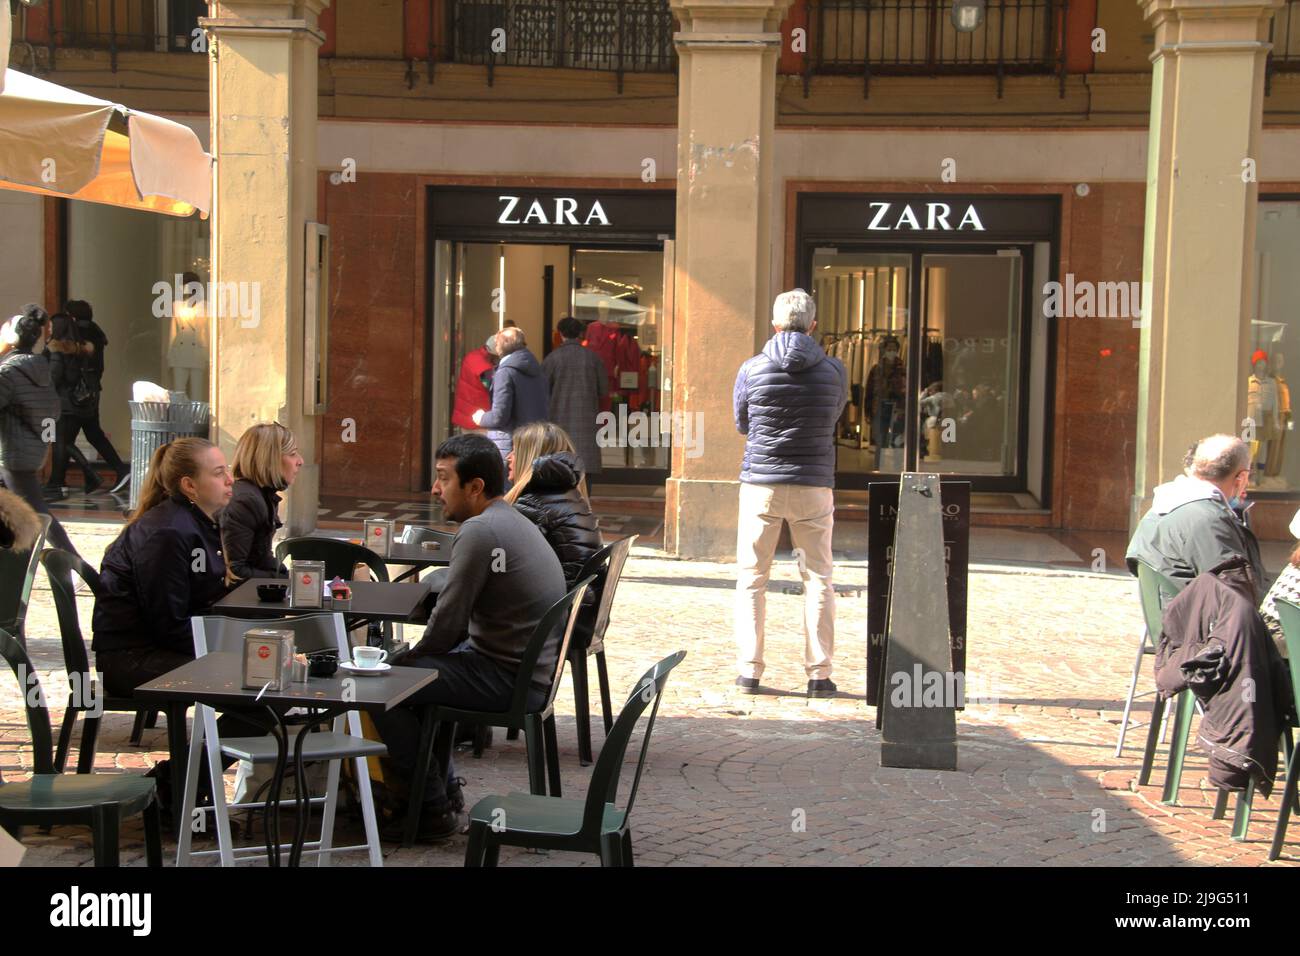 Zara Shop front, Italie Photo Stock - Alamy